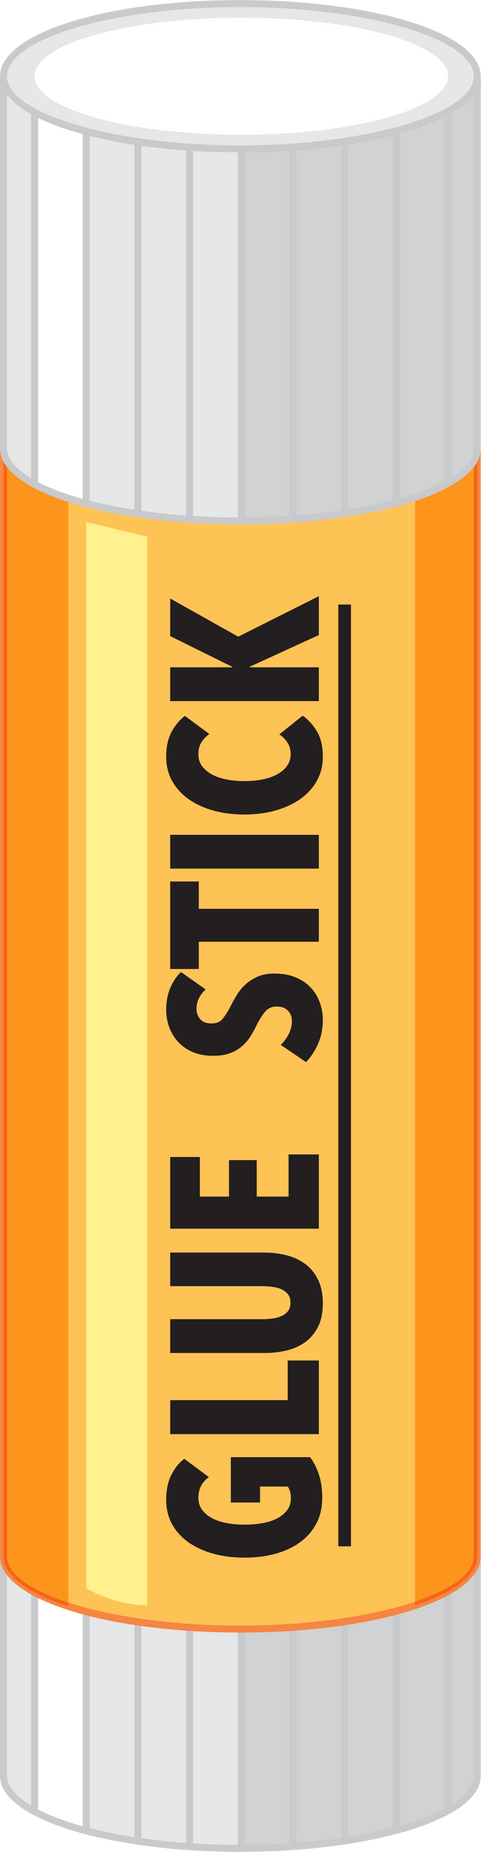 Gluestick in yellow isolated